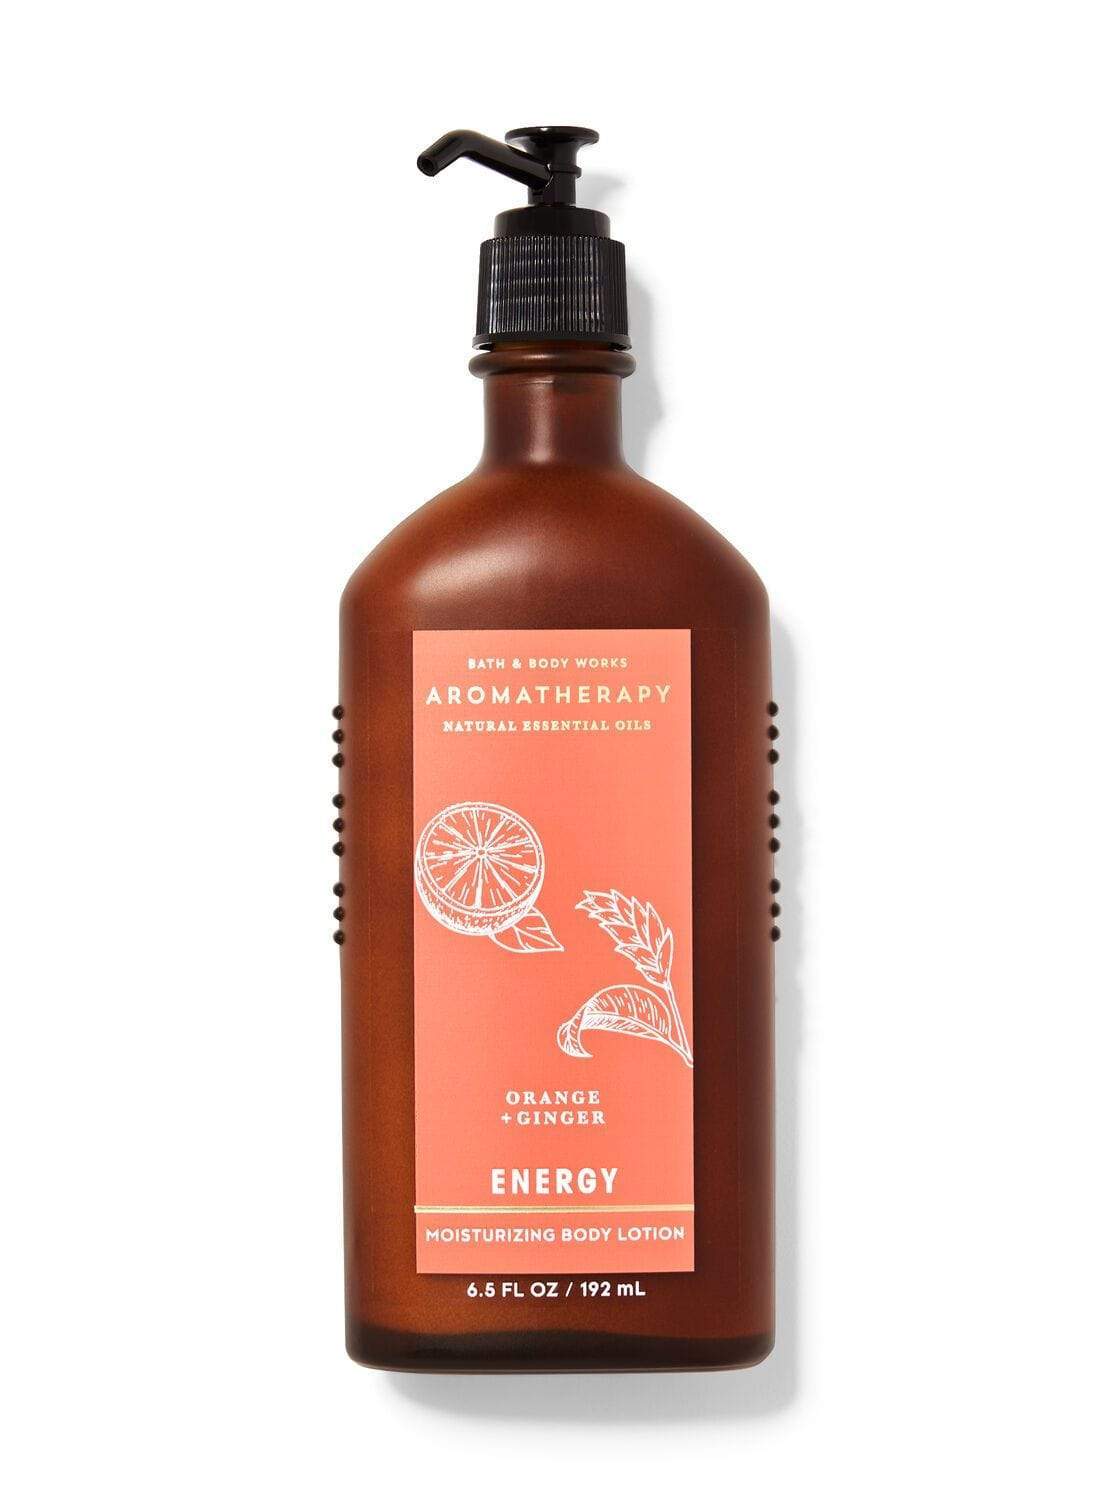 Bath & Body Works Aromatherapy Body Lotion Energy Orange + Ginger 6.5Oz/192Ml - Highfy.pk